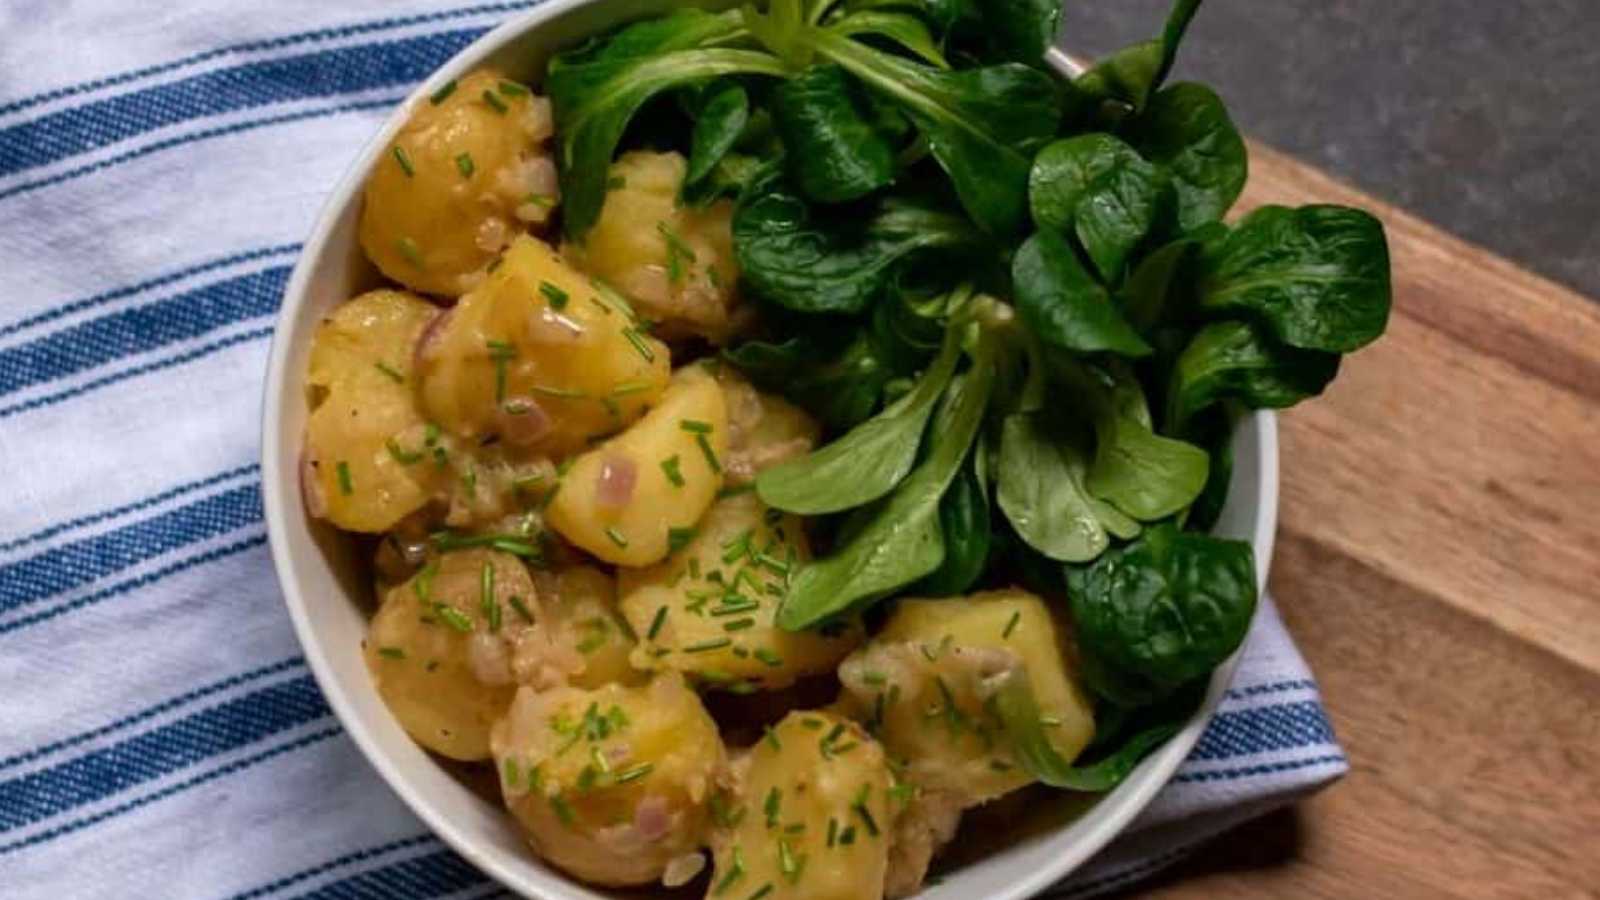 A bowl of Austrian potato salad consisting of potatoes, chicken stock, vinegar, onions, and mustard.